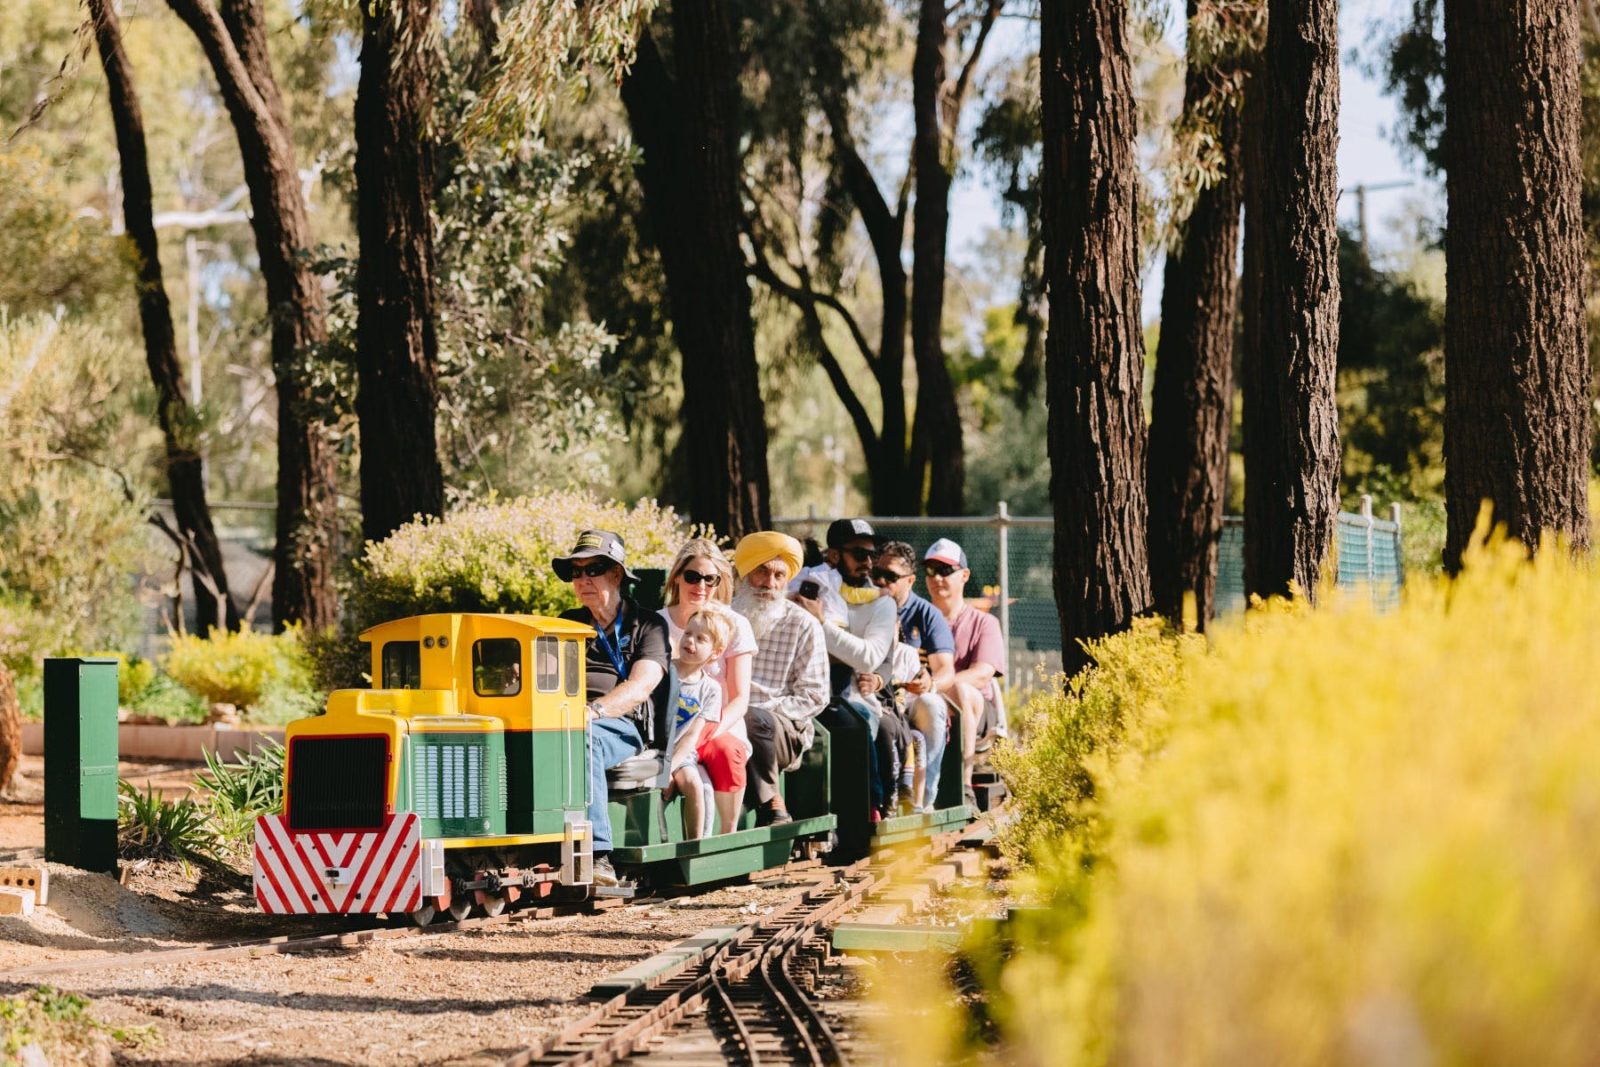 Willans Hill Miniature Railway Rides